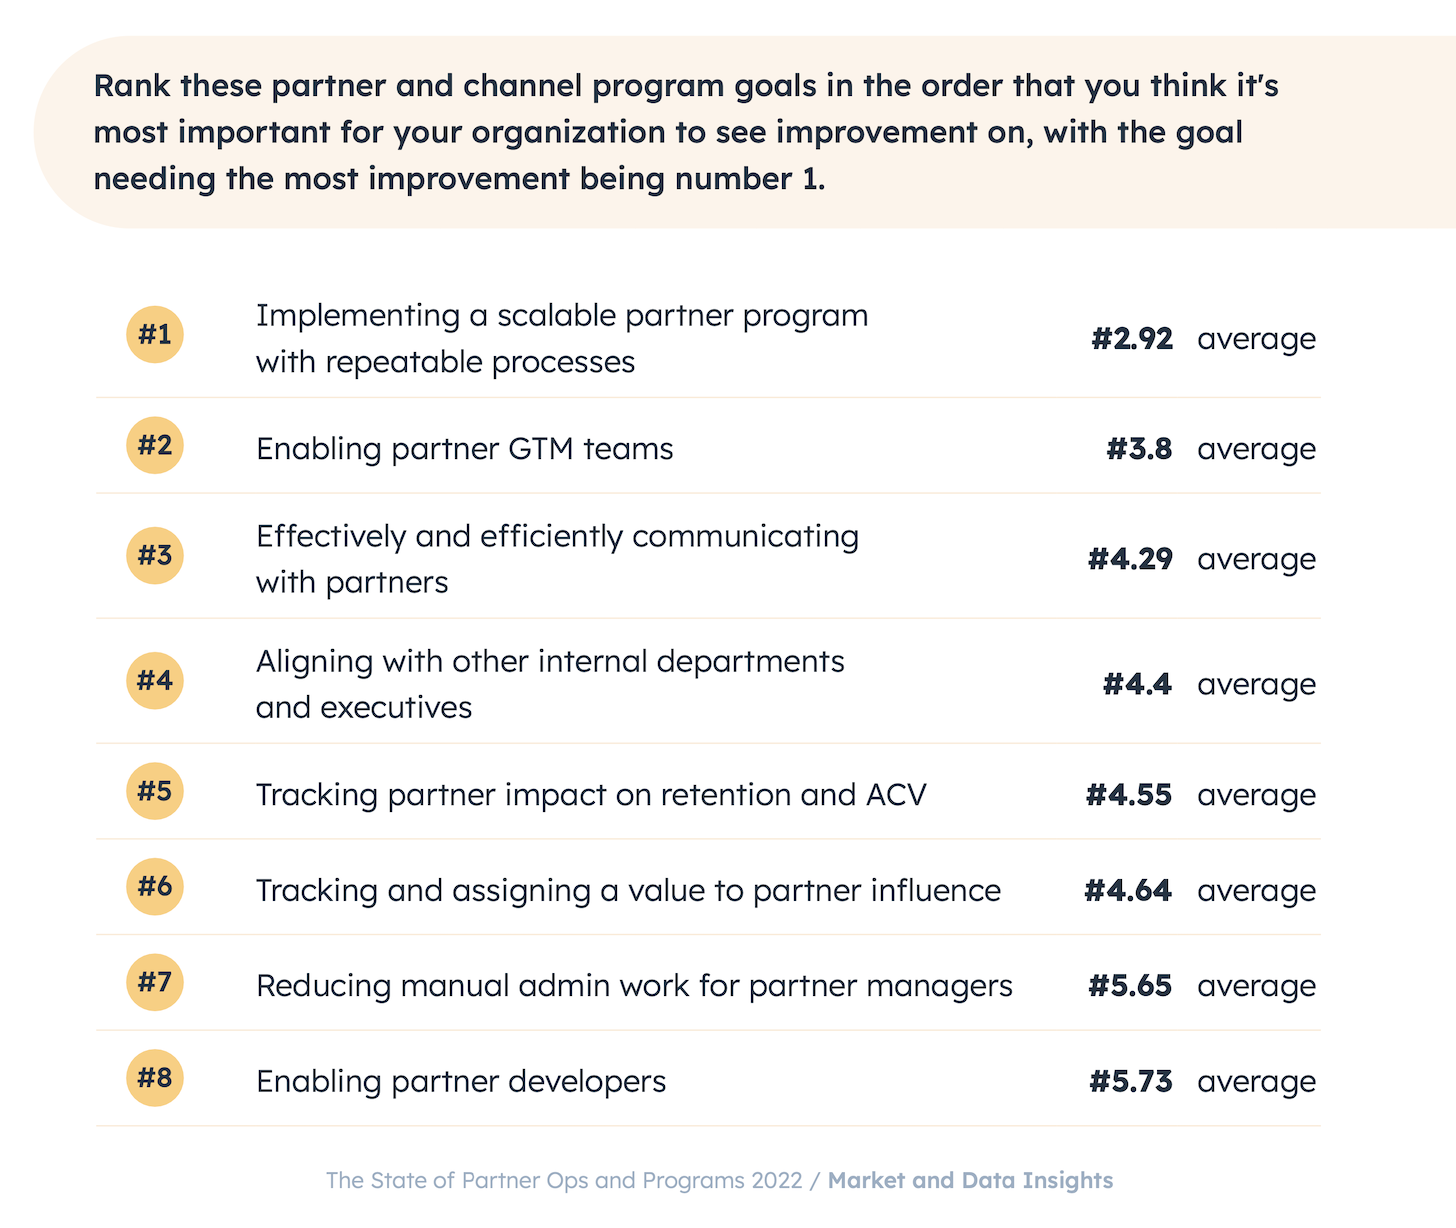 Partner Program Improvement Goals: What Should Partner Operations Do?